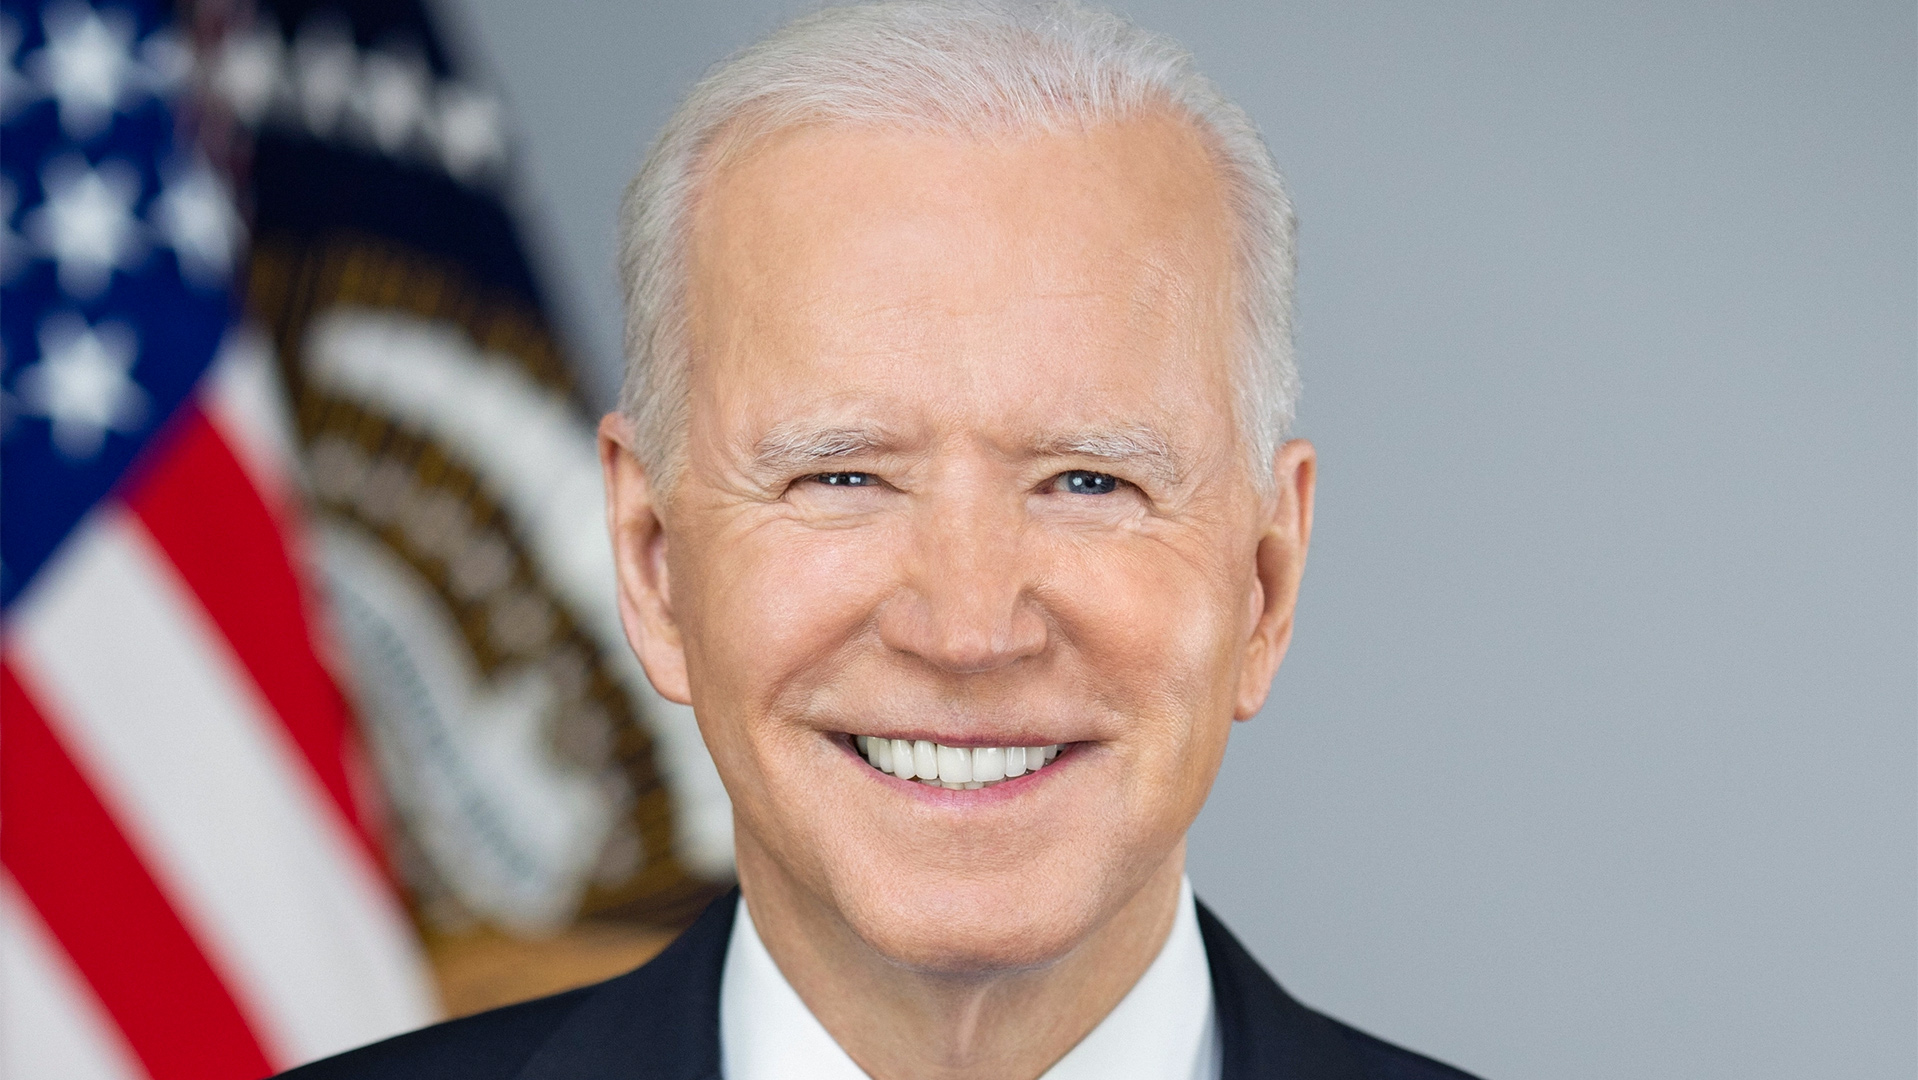 President Biden official portrait